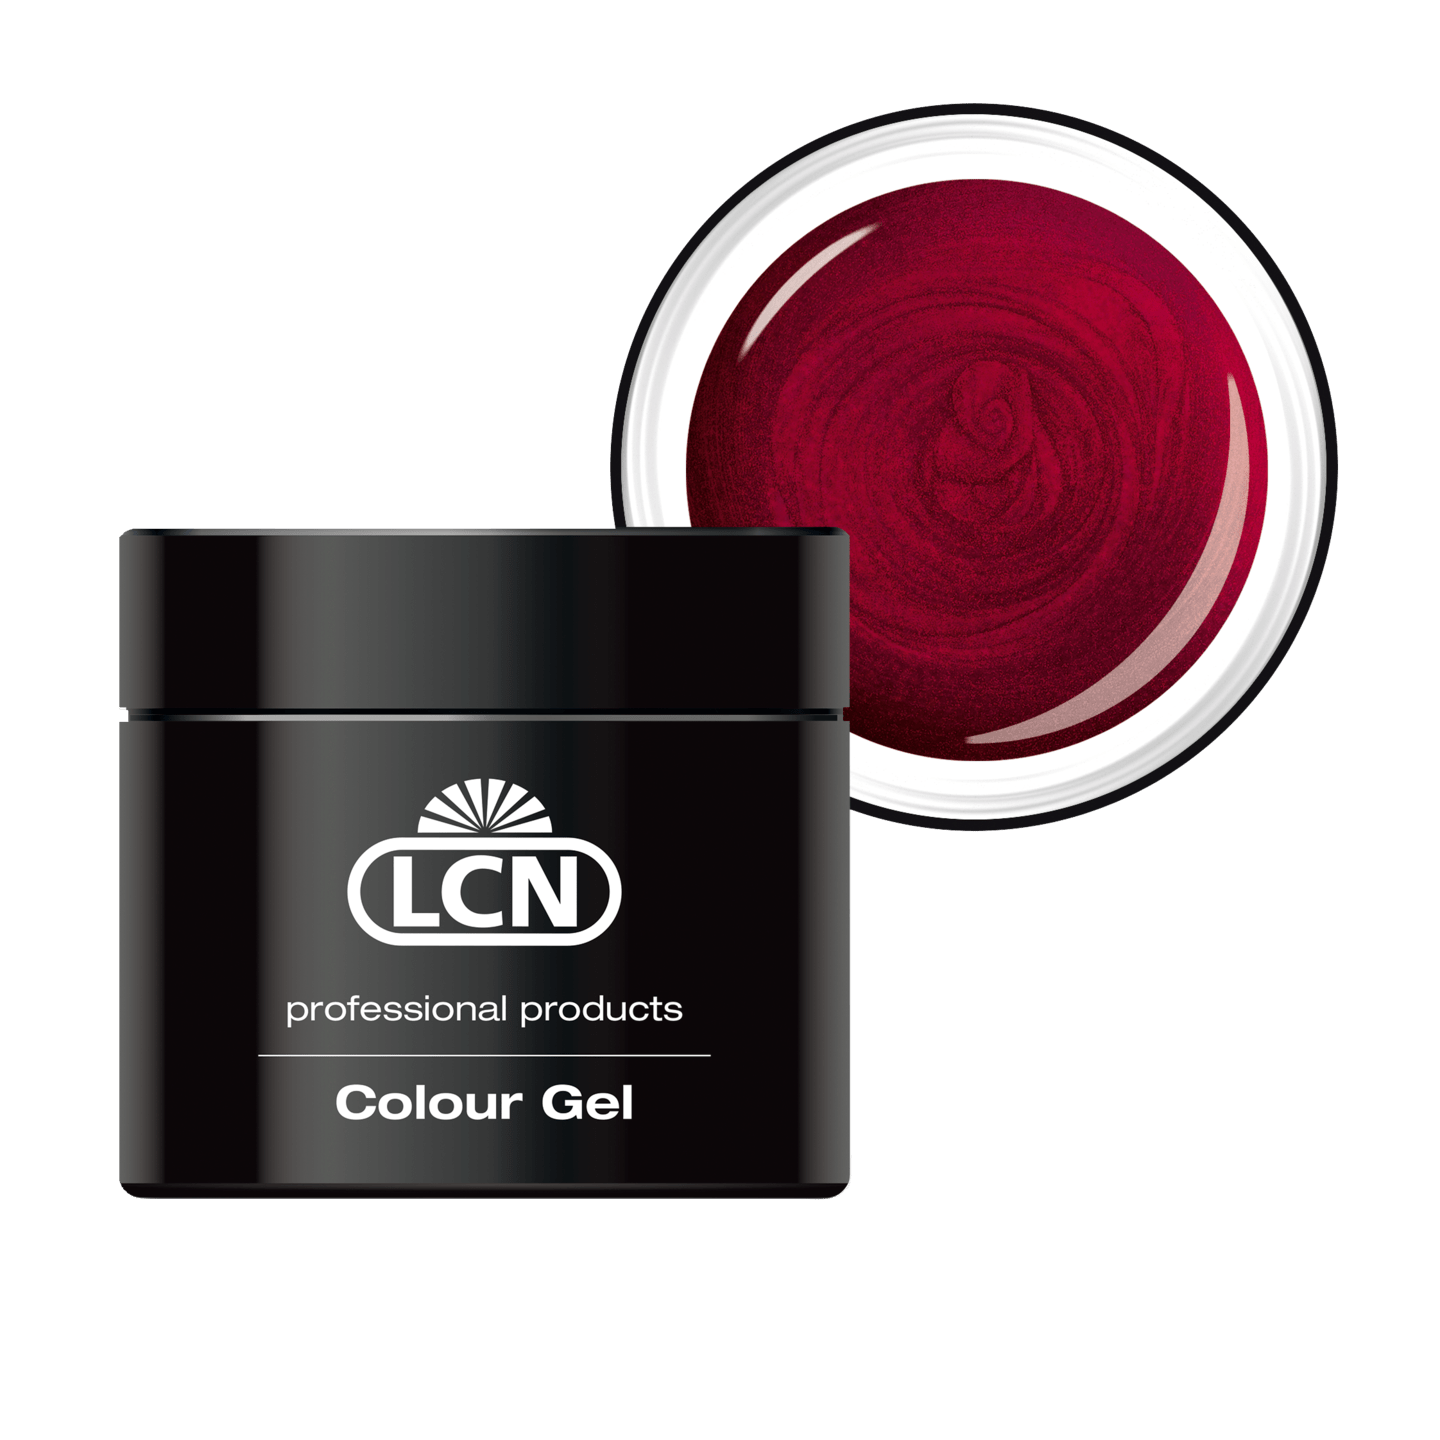 LCN - Trend Colour Gel "Diamond Collection", 5 ml in rubin red